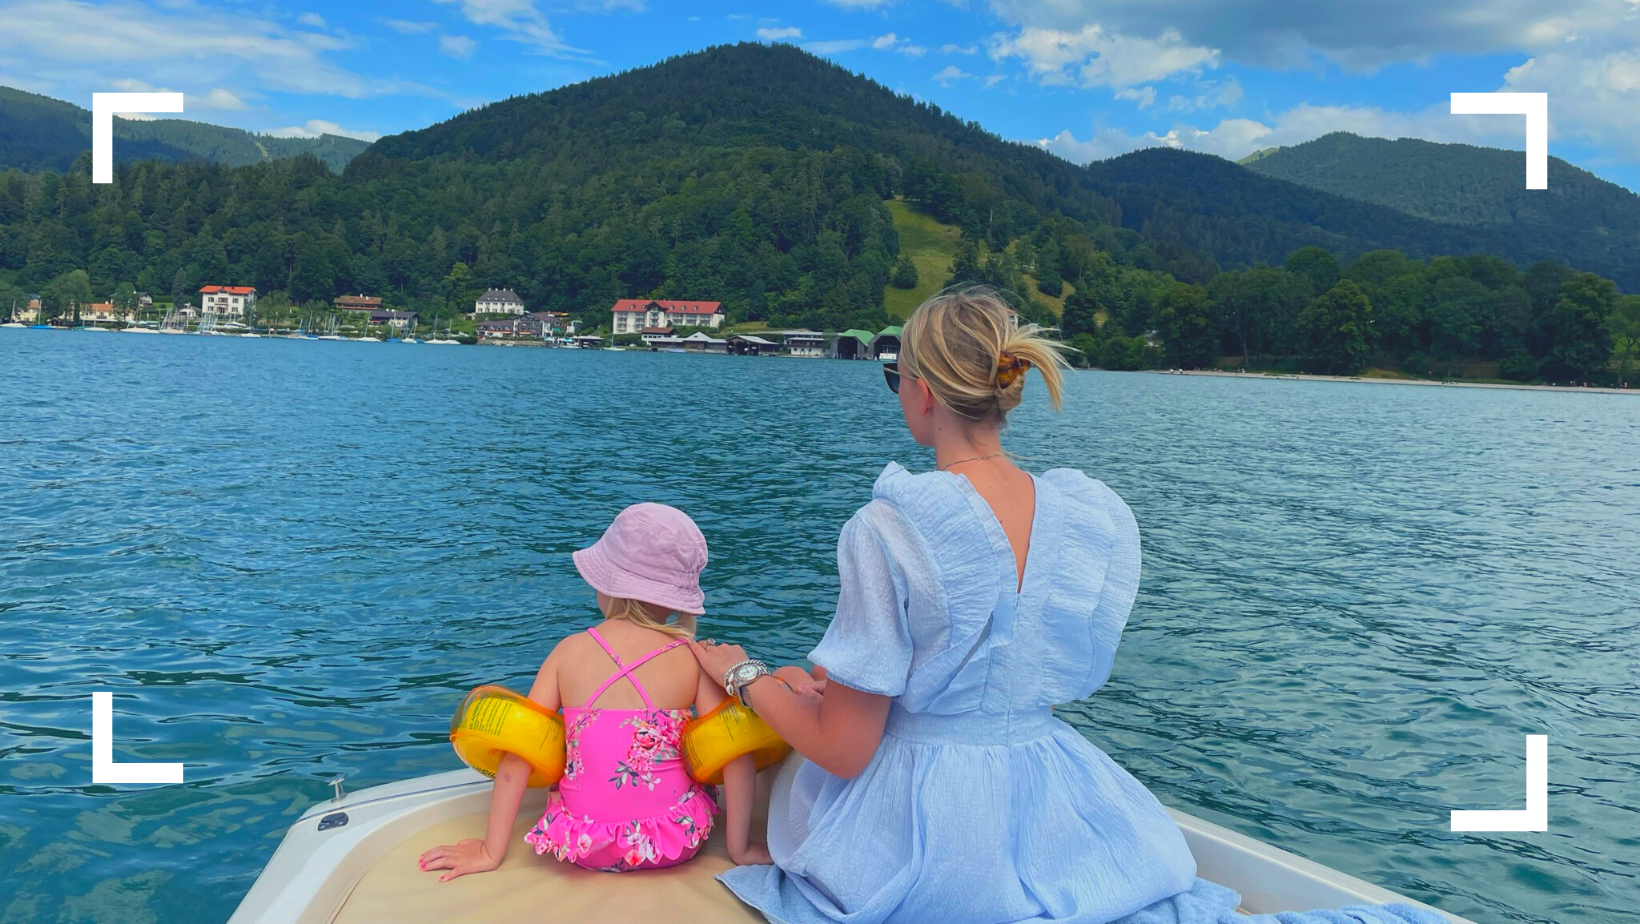 Familienurlaub am Tegernsee - Bootfahren mit Kind Tegernsee